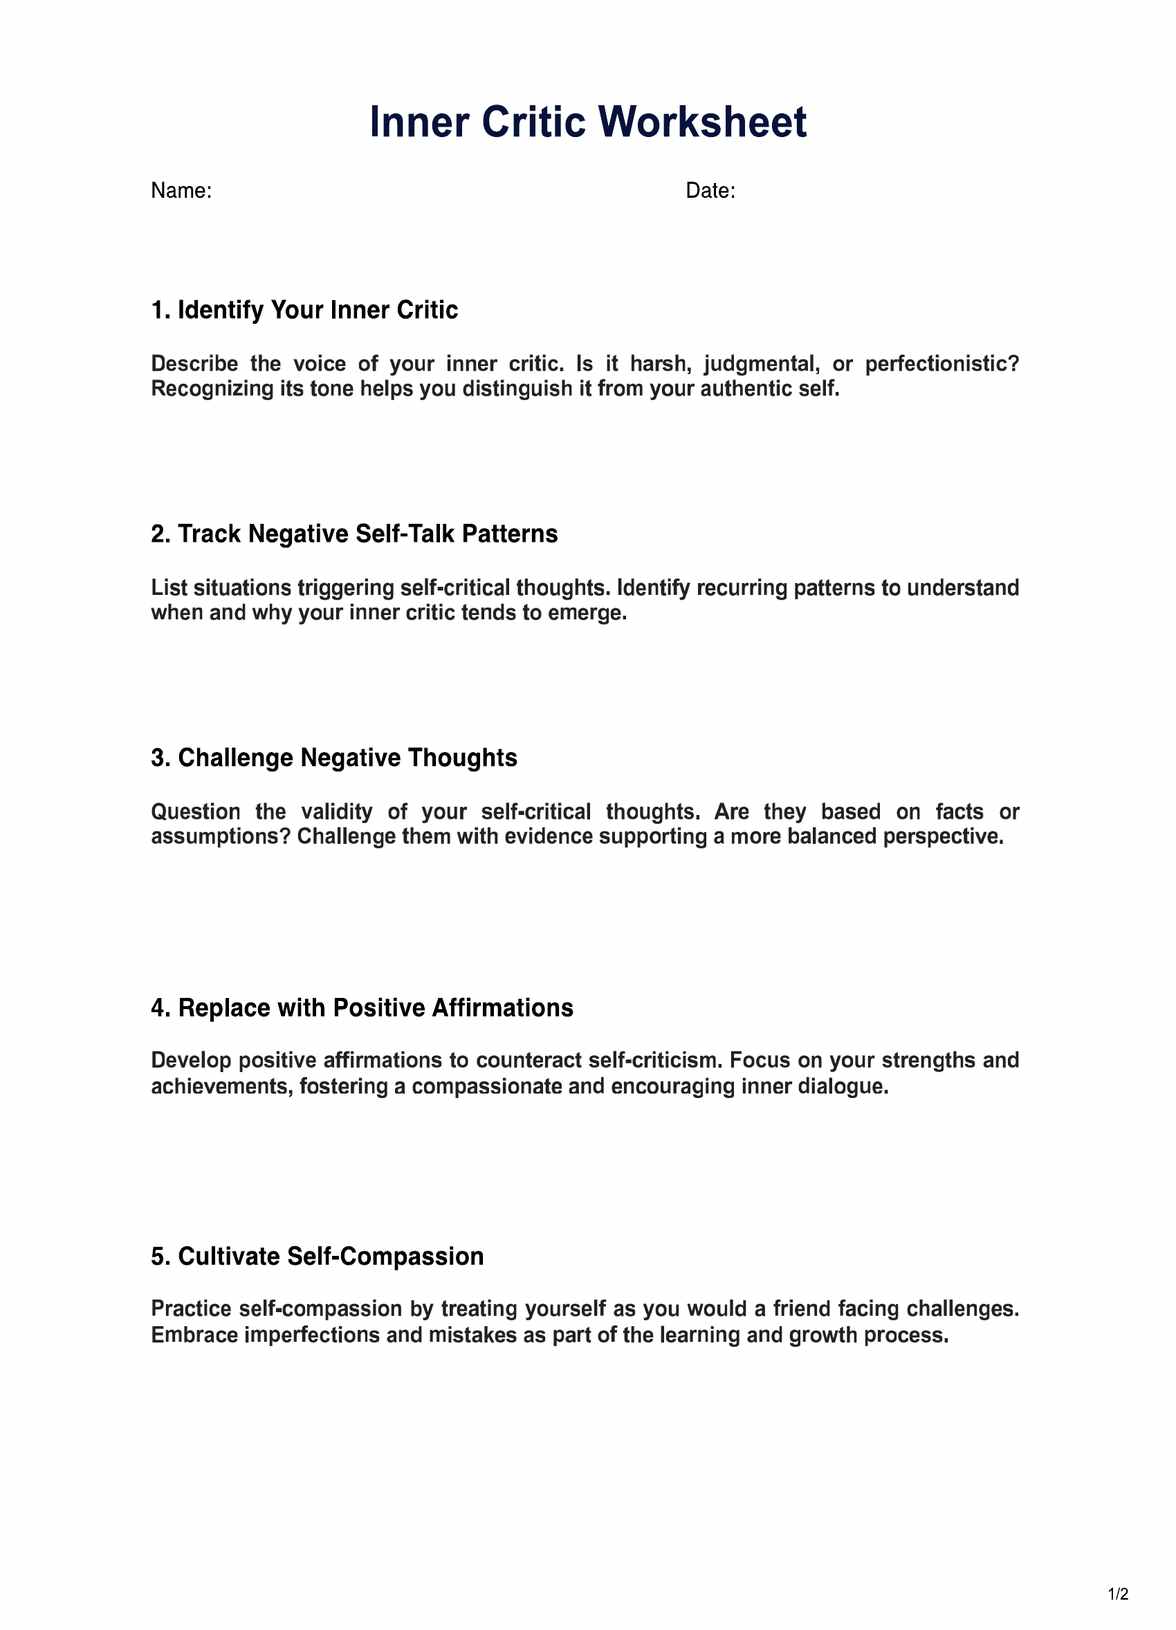 Inner Critic Worksheet PDF Example